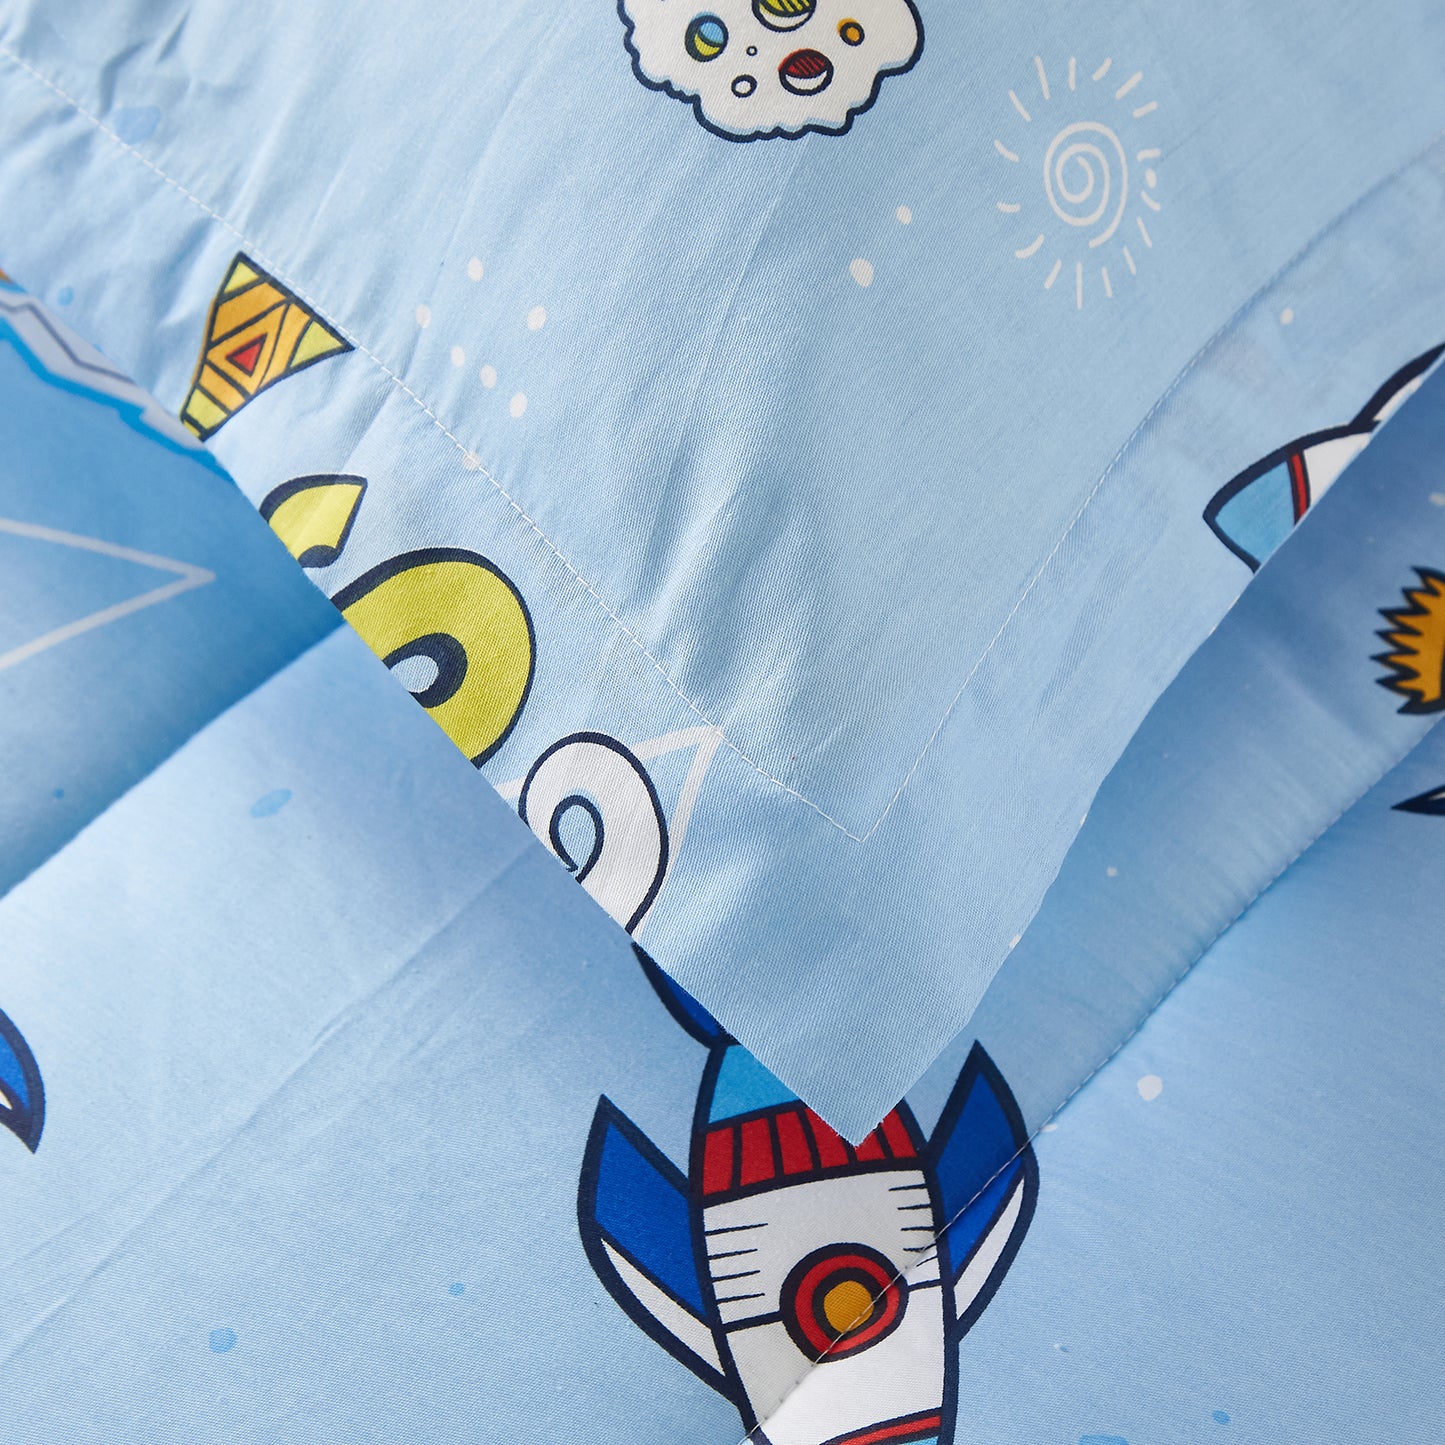 100% Cotton Children's Bedding Space Shuttle Rocket Design Comforter Set